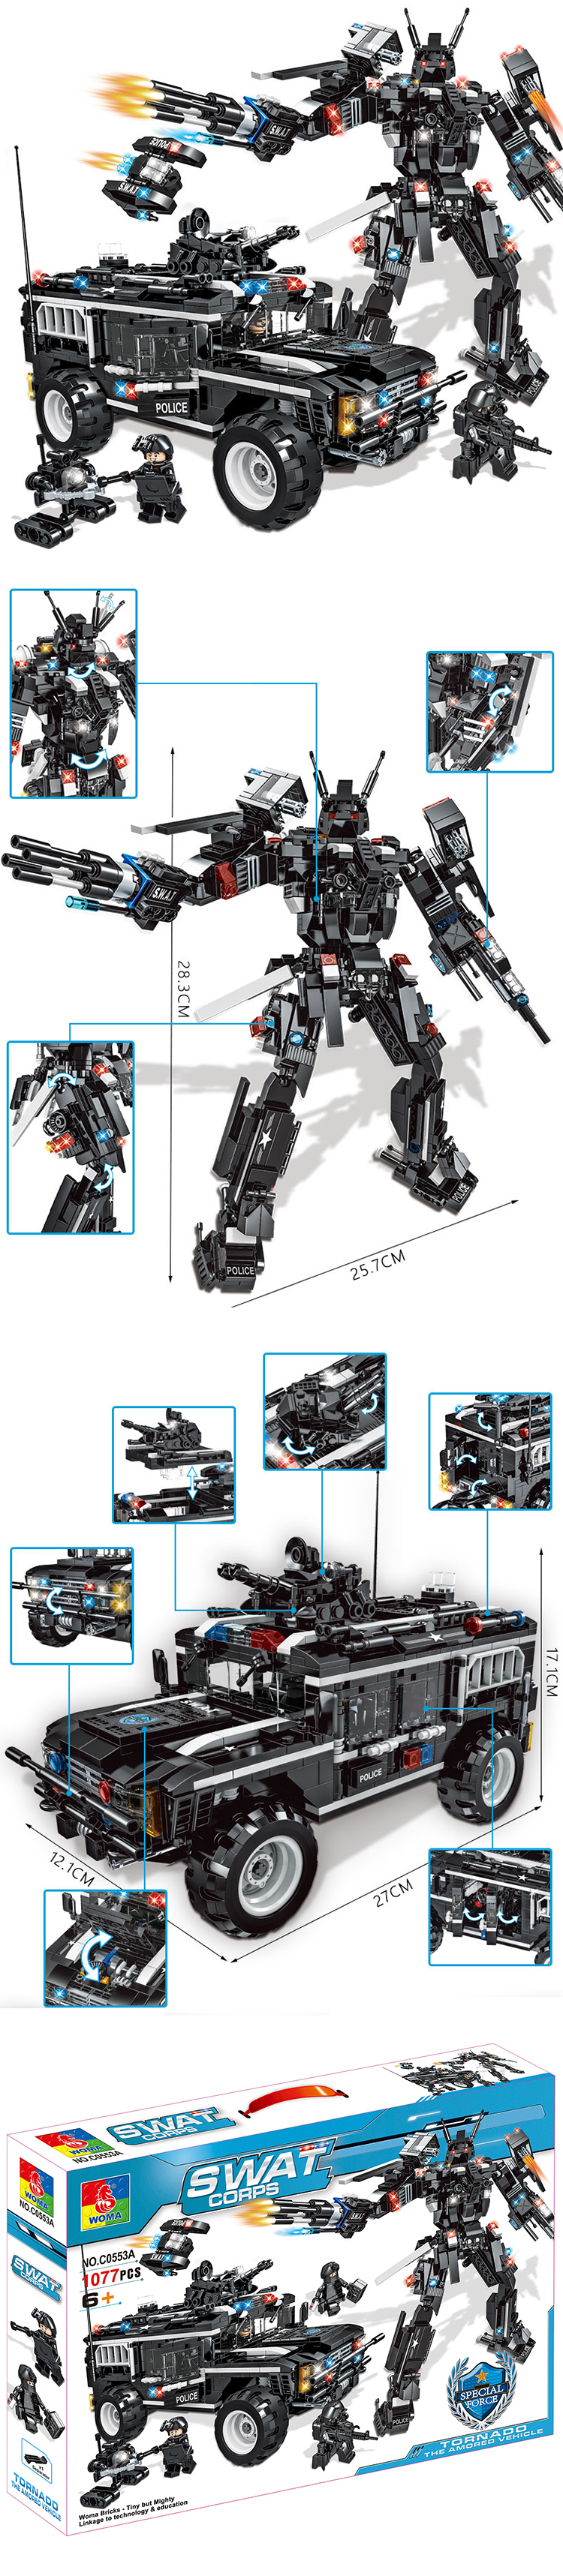 WOMA TOYS 1077pcs Boy birthday gift 2 in 1 SWAT Team transform robot model small bricks building blocks educational toys set